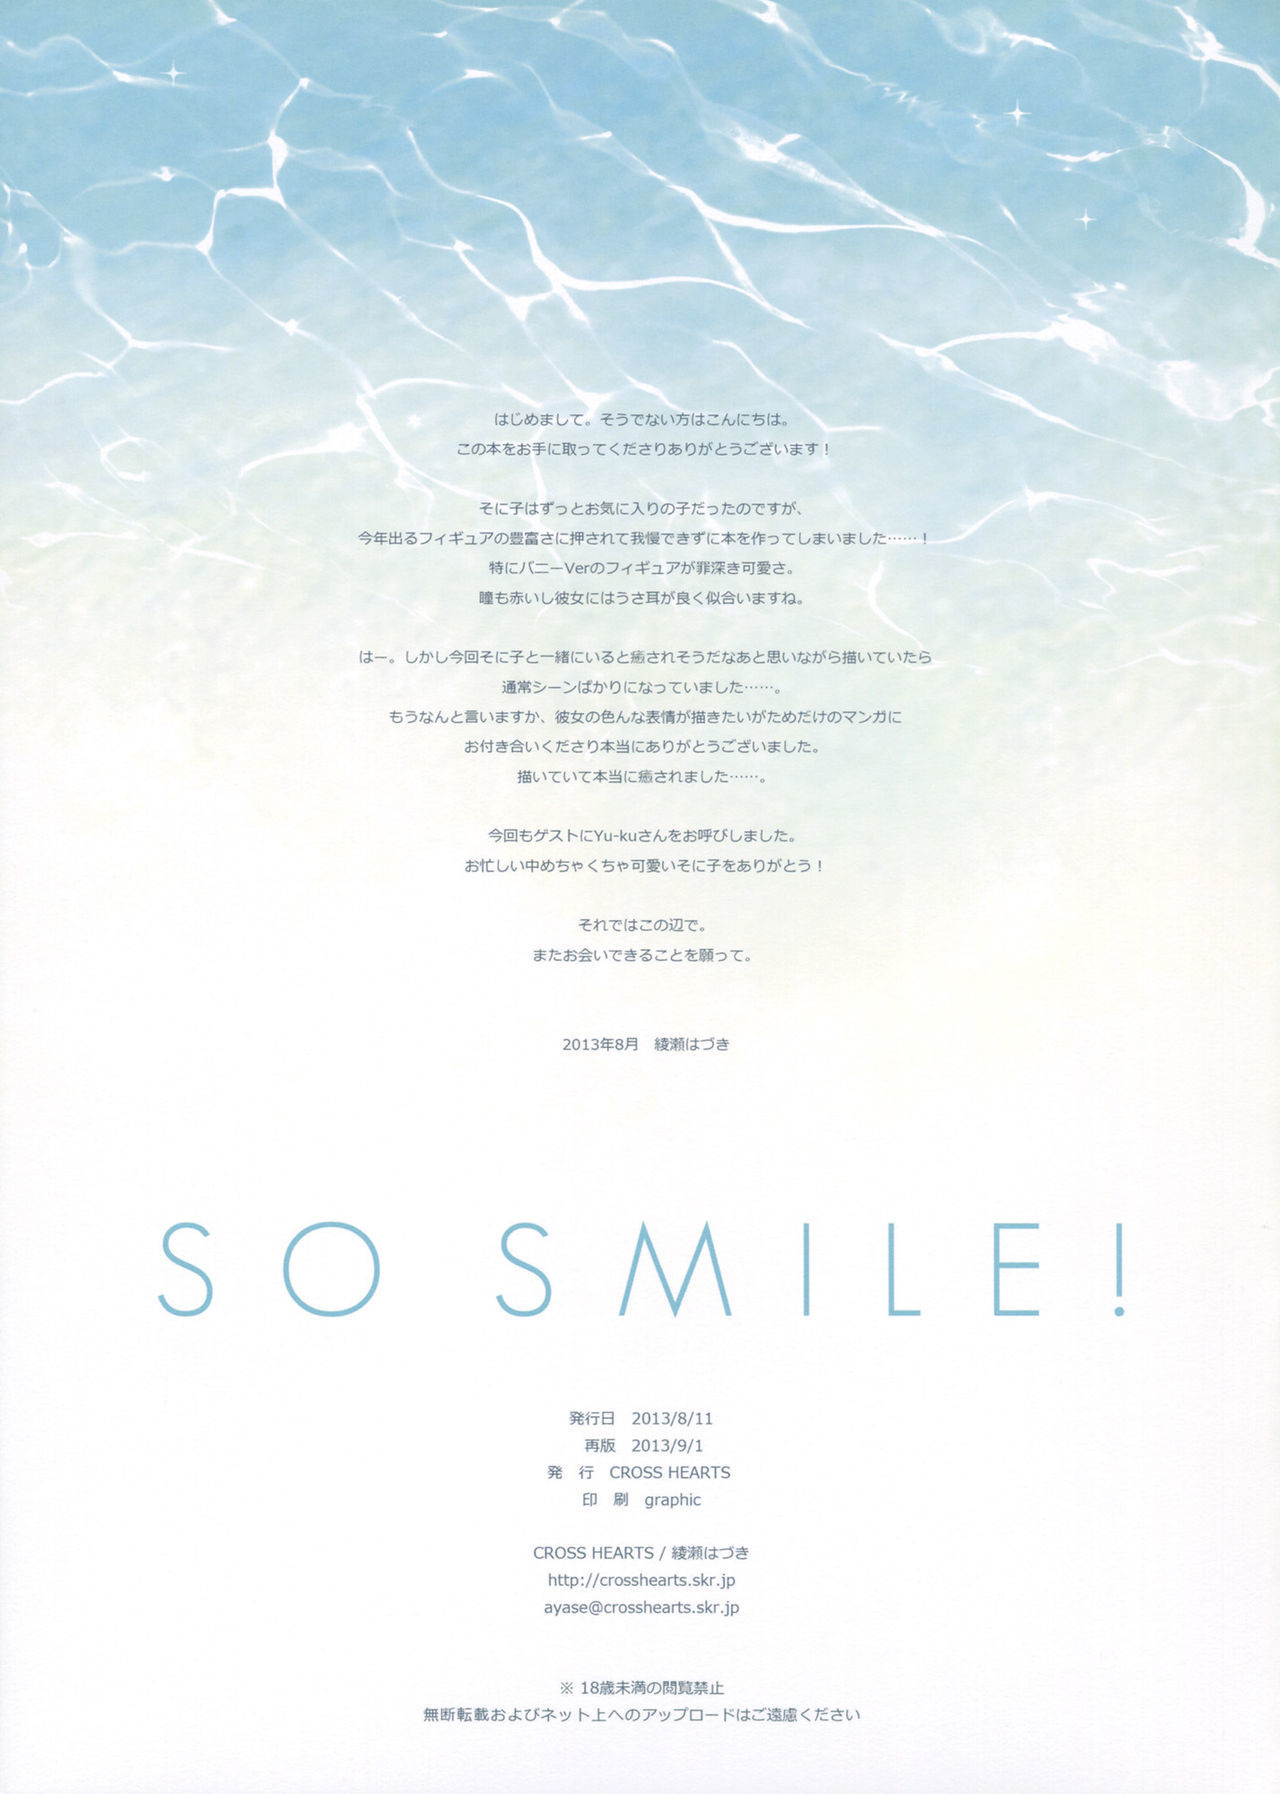 [cross Herz (ayase hazuki)] So smile! (super sonico) [2013 09 01] [smdc]